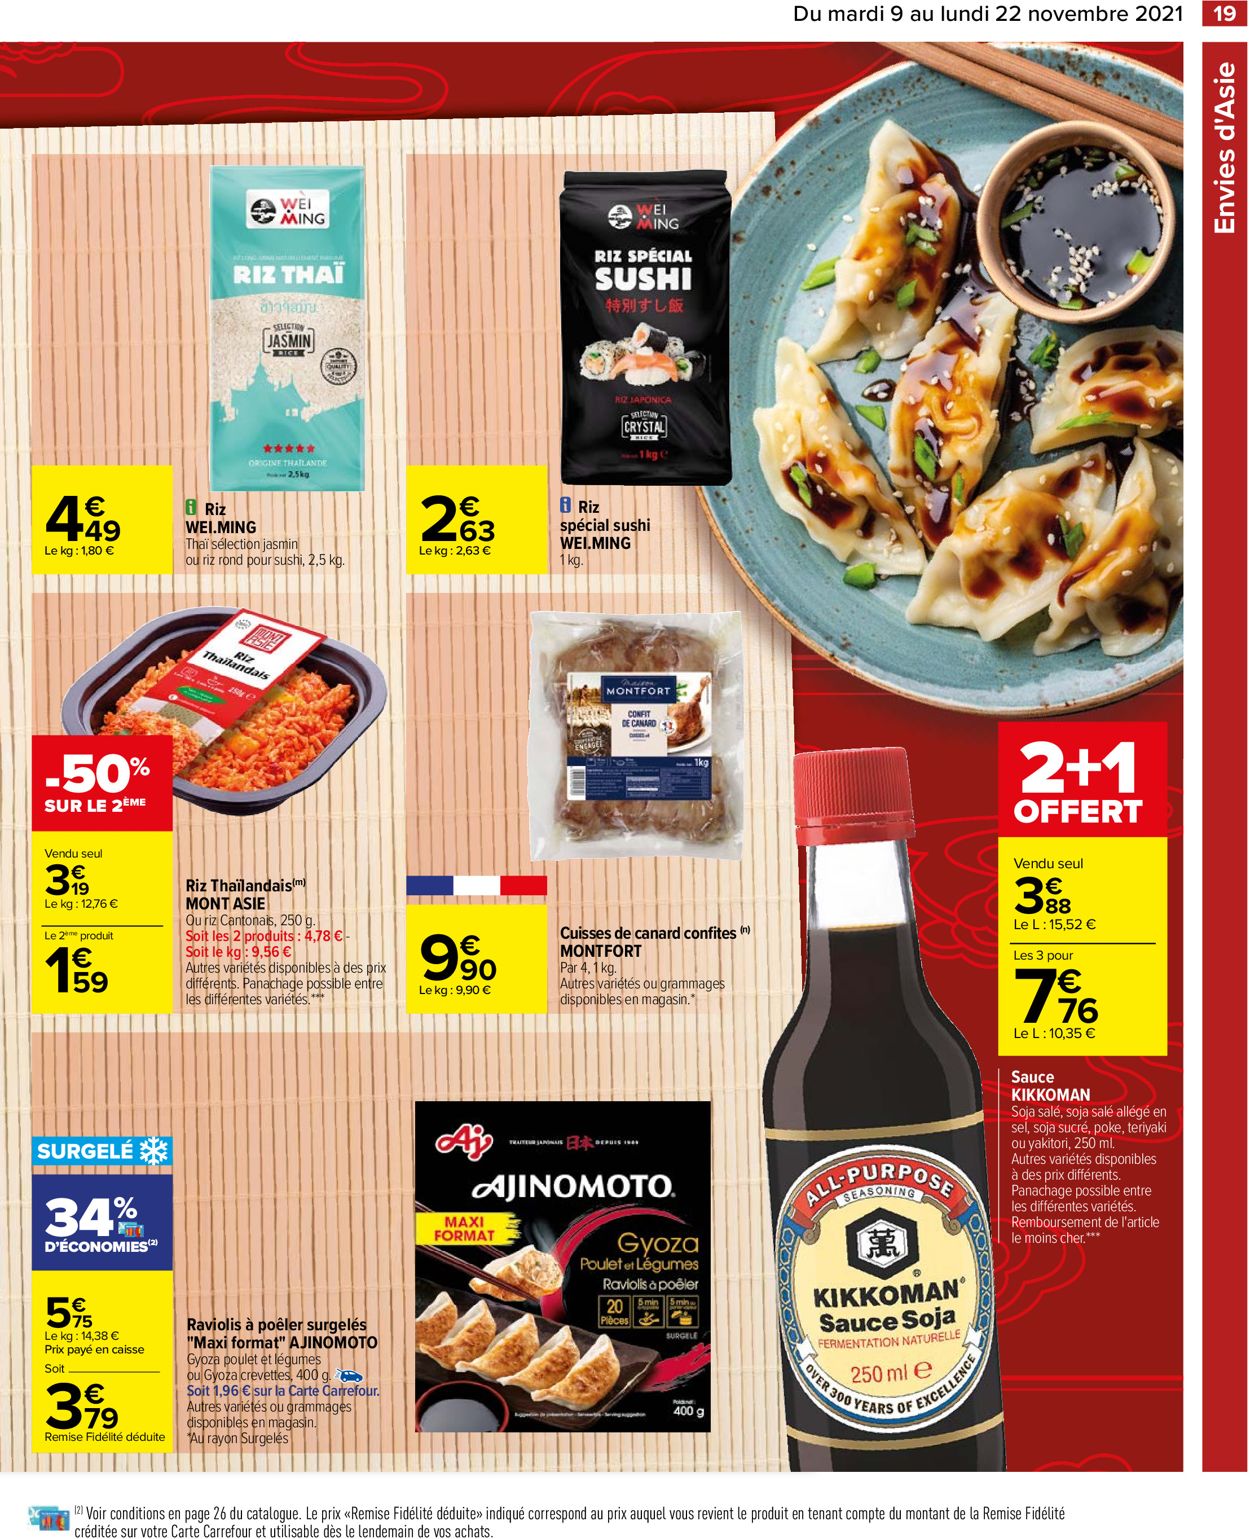 Carrefour Catalogue - 09.11-22.11.2021 (Page 19)